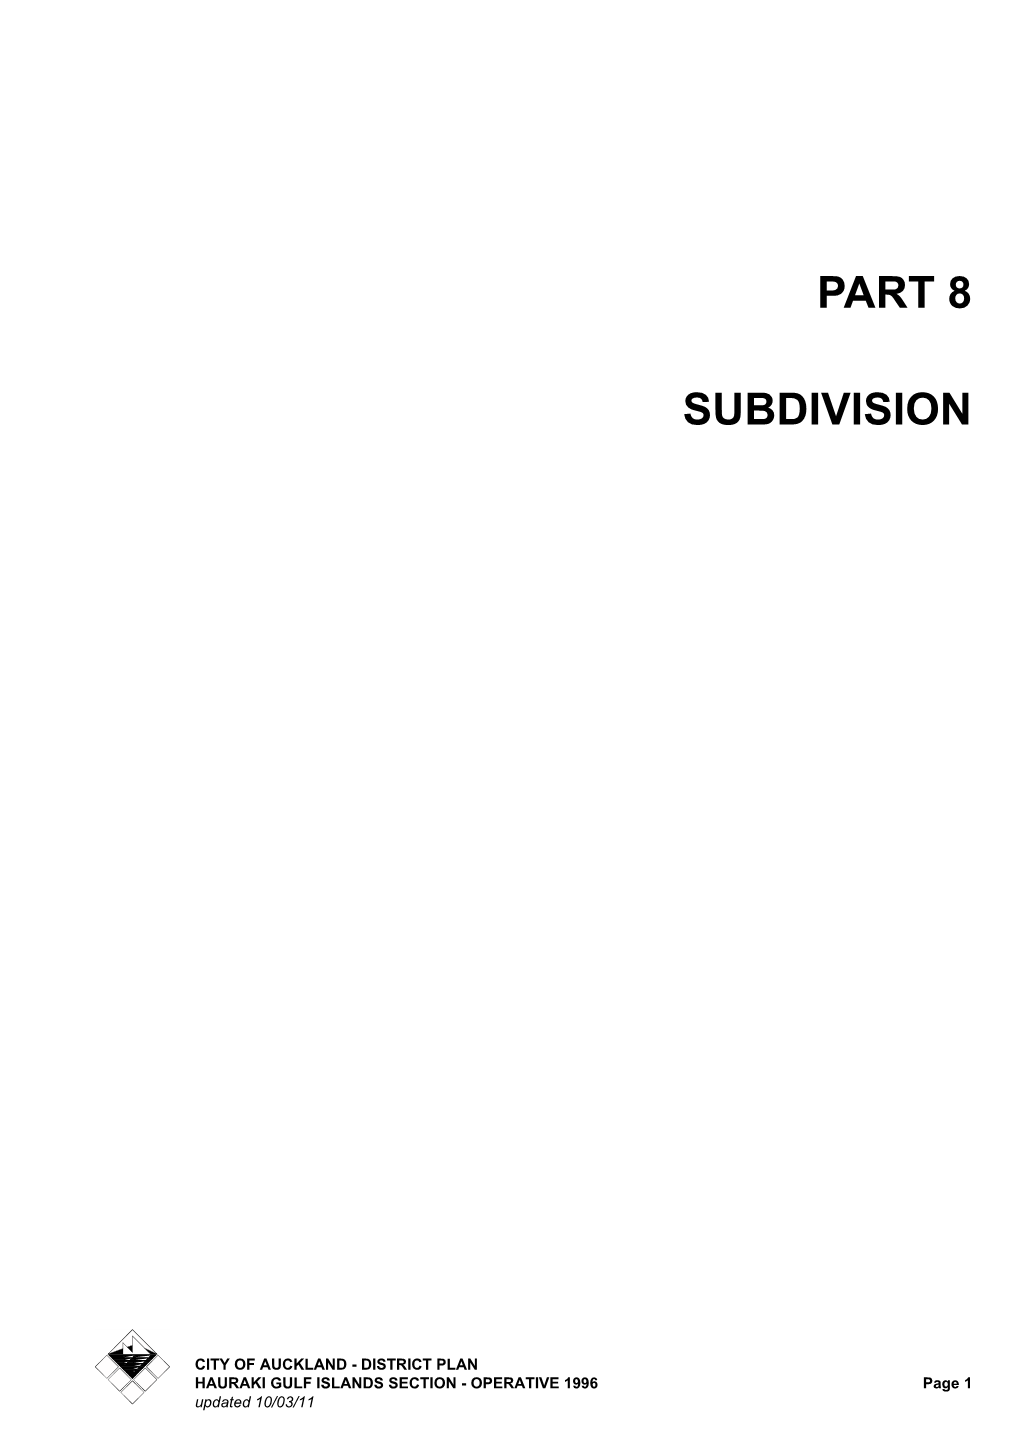 Hauraki Gulf Islands Section: Part 8 Subdivision